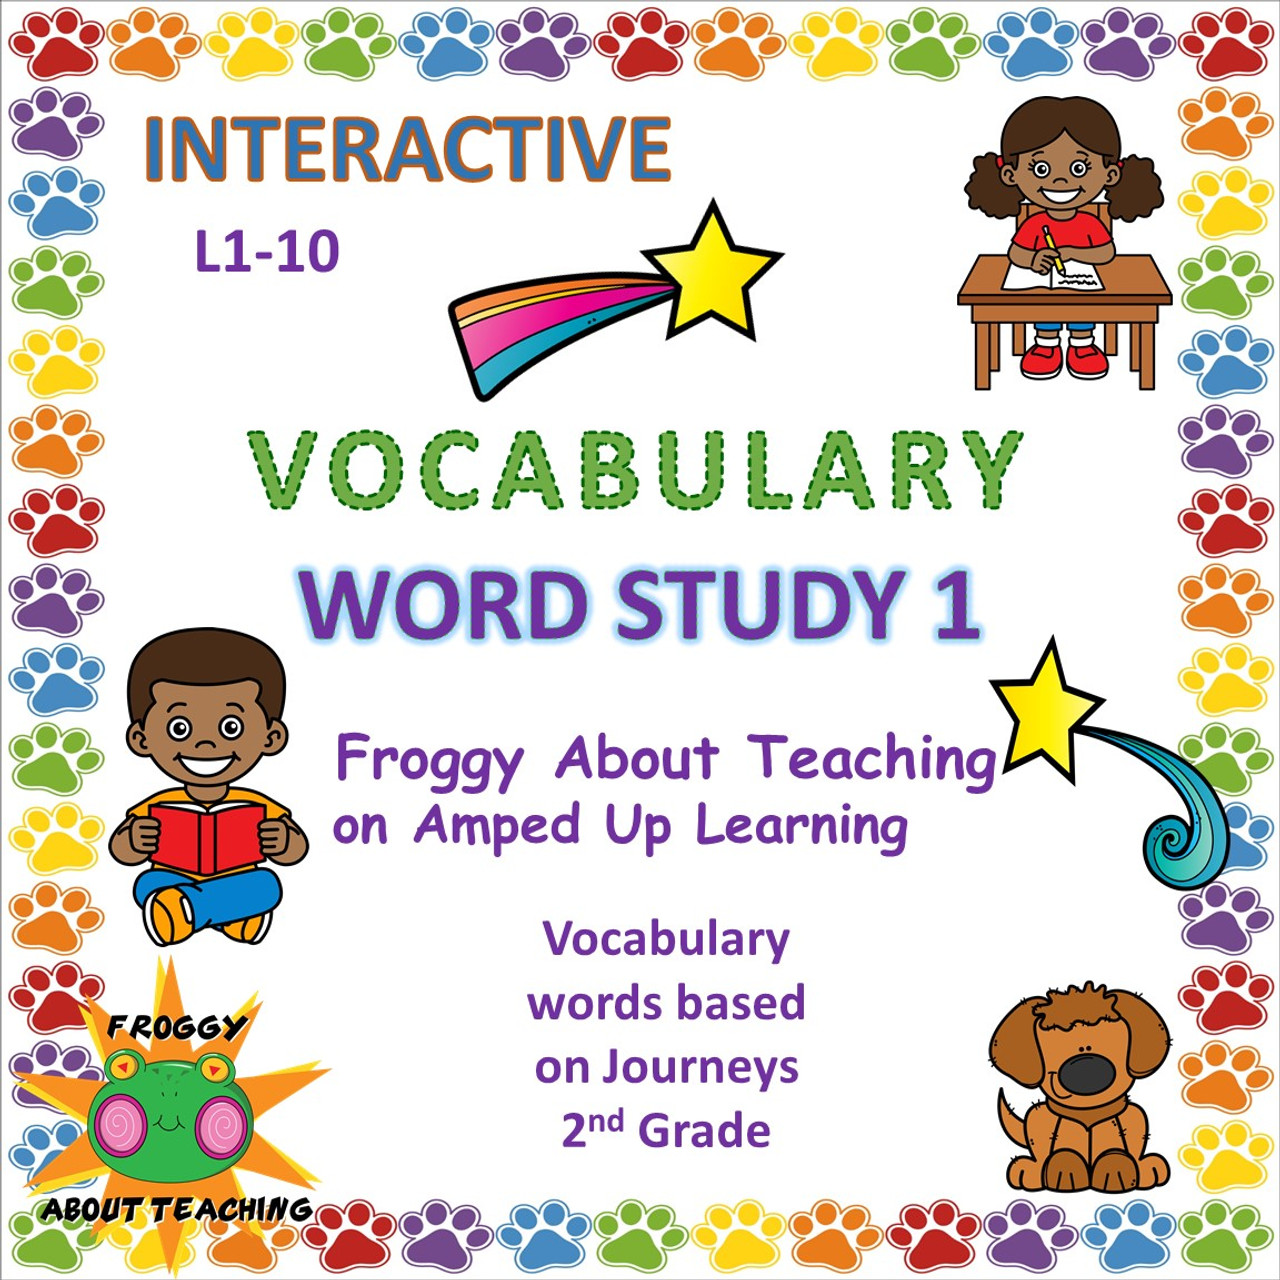 Vocabulary Study 1 (2nd g. L 1-10)